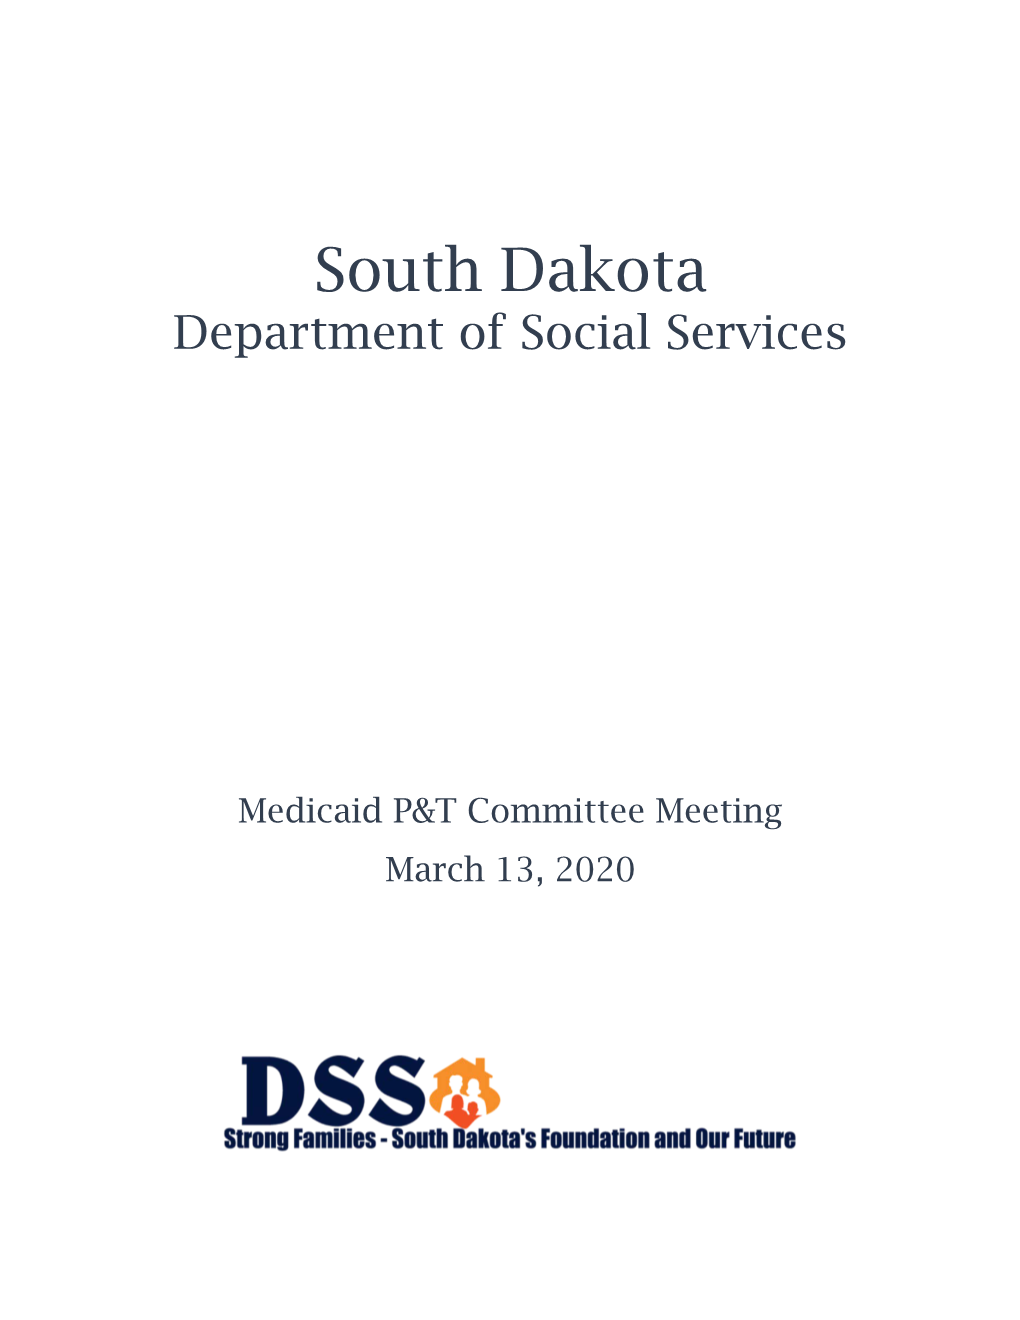 South Dakota Department of Social Services